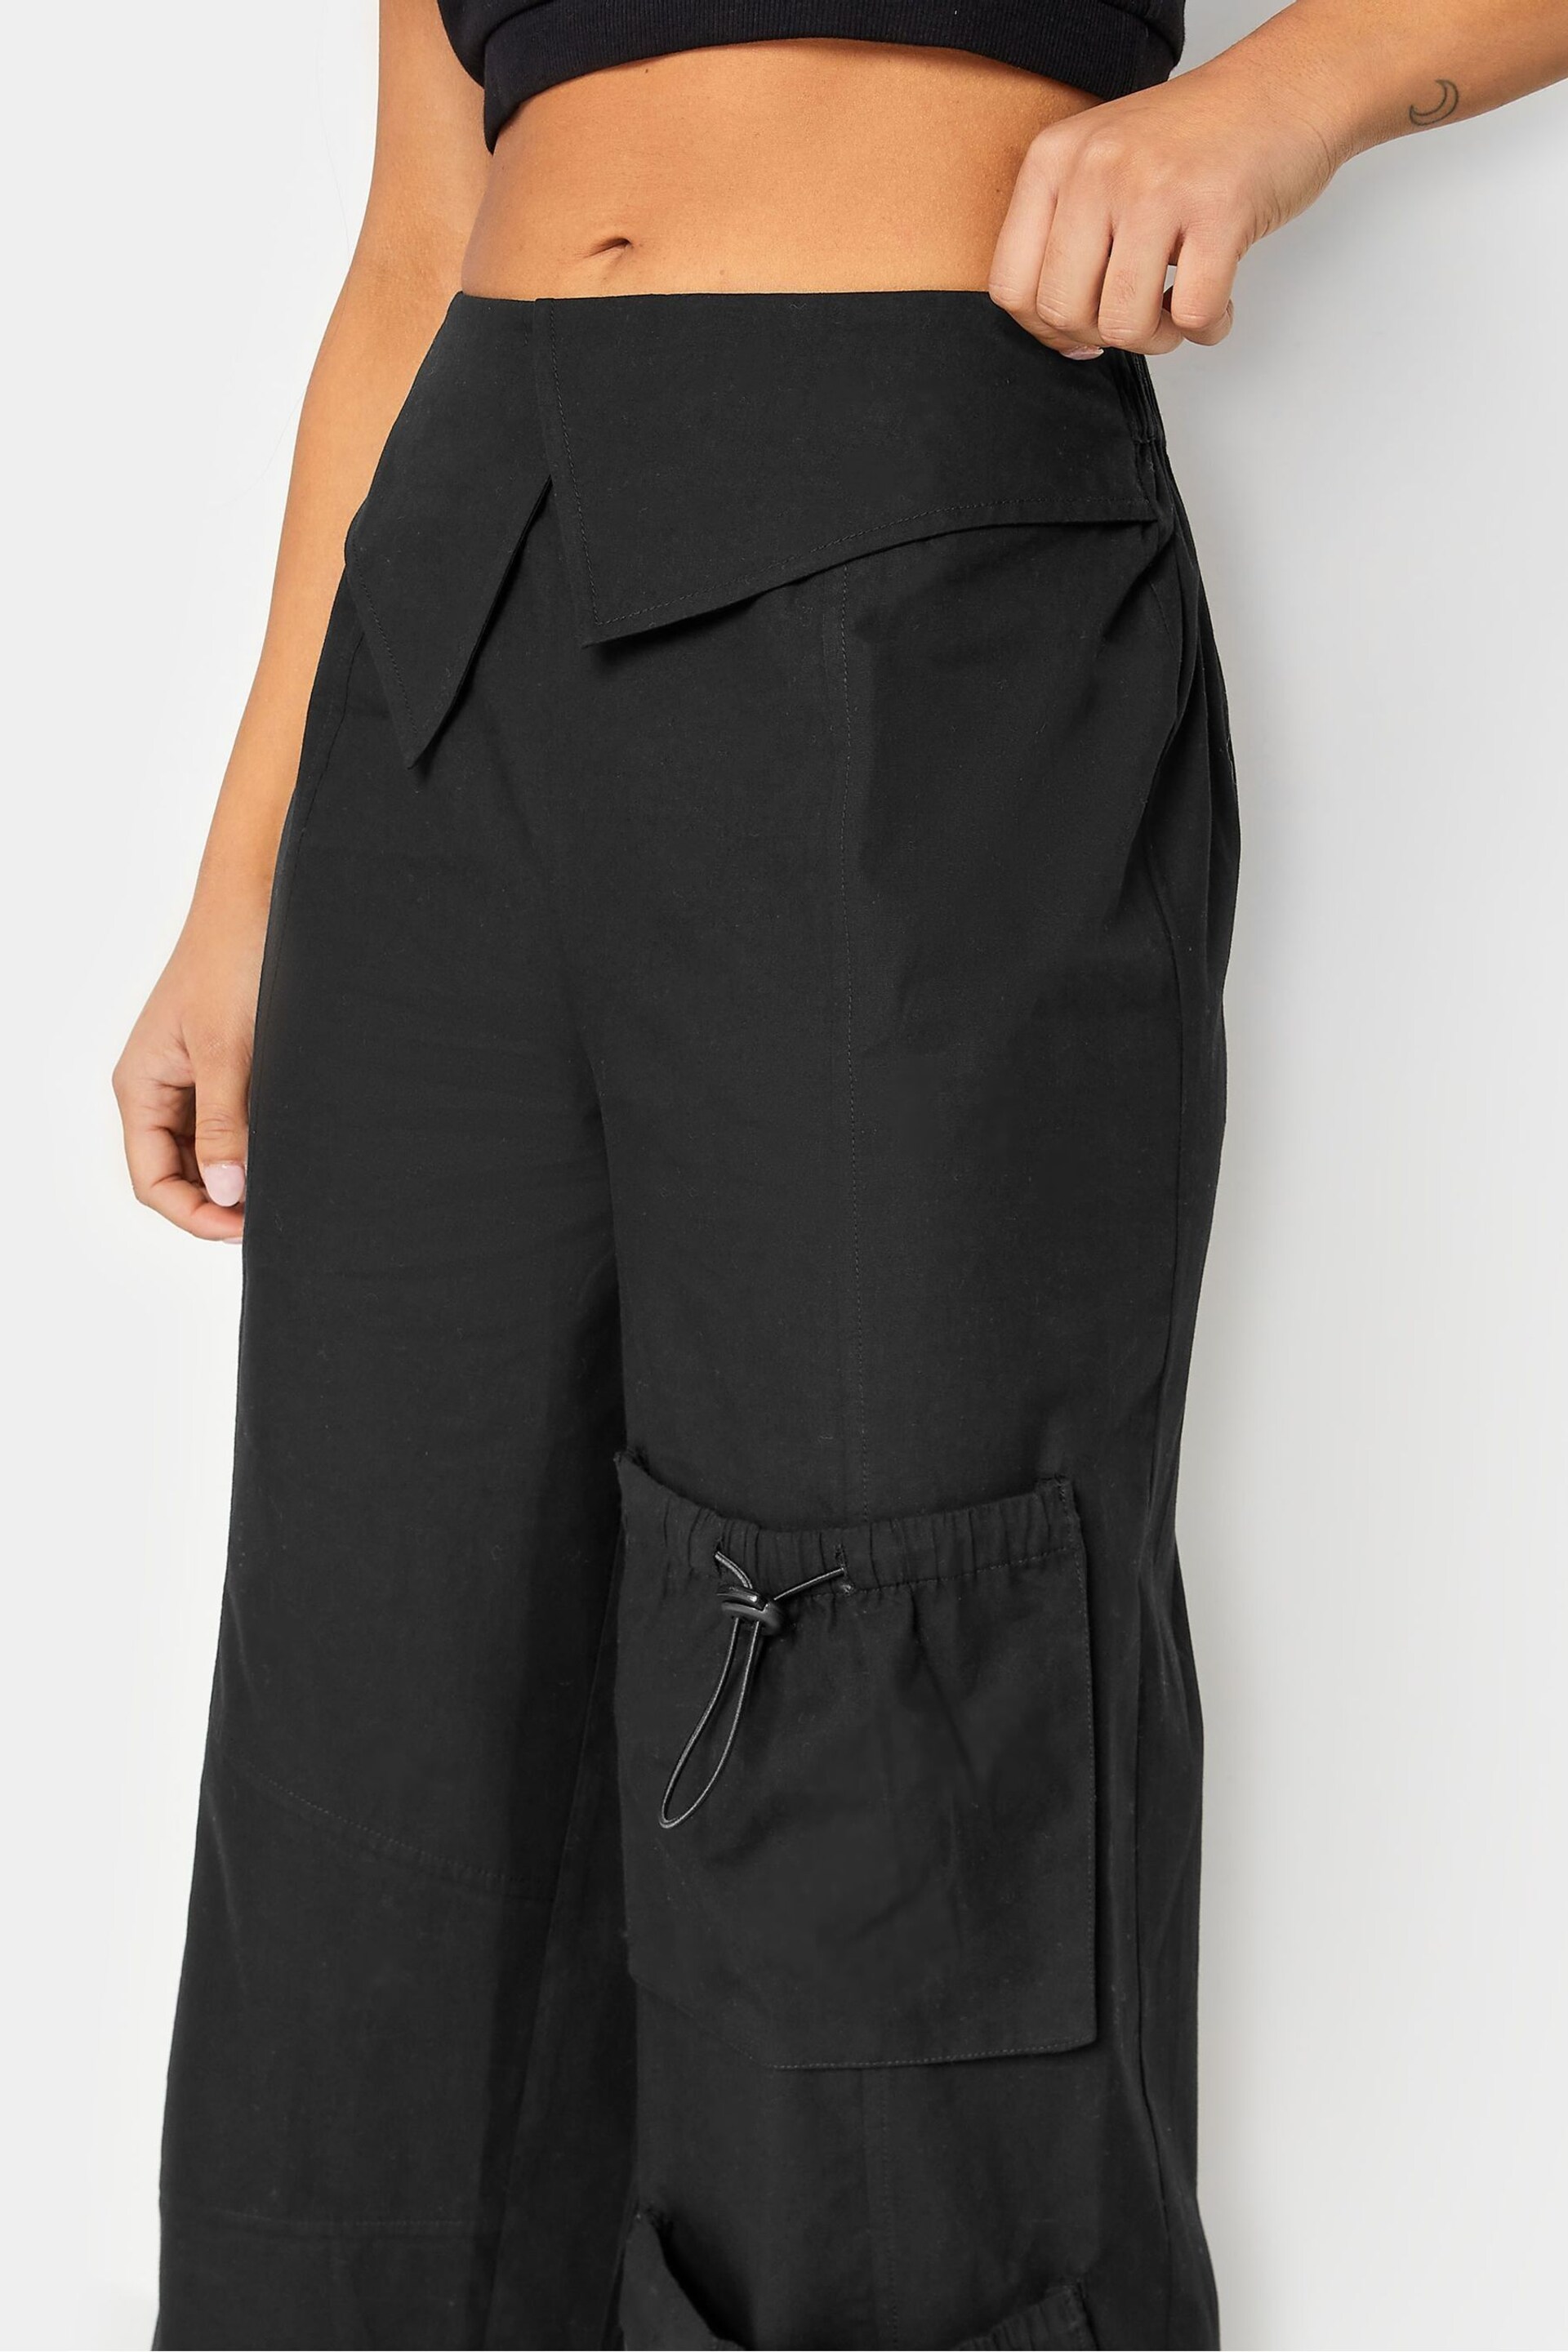 PixieGirl Petite Black Fold Over Cargo Trousers - Image 5 of 5